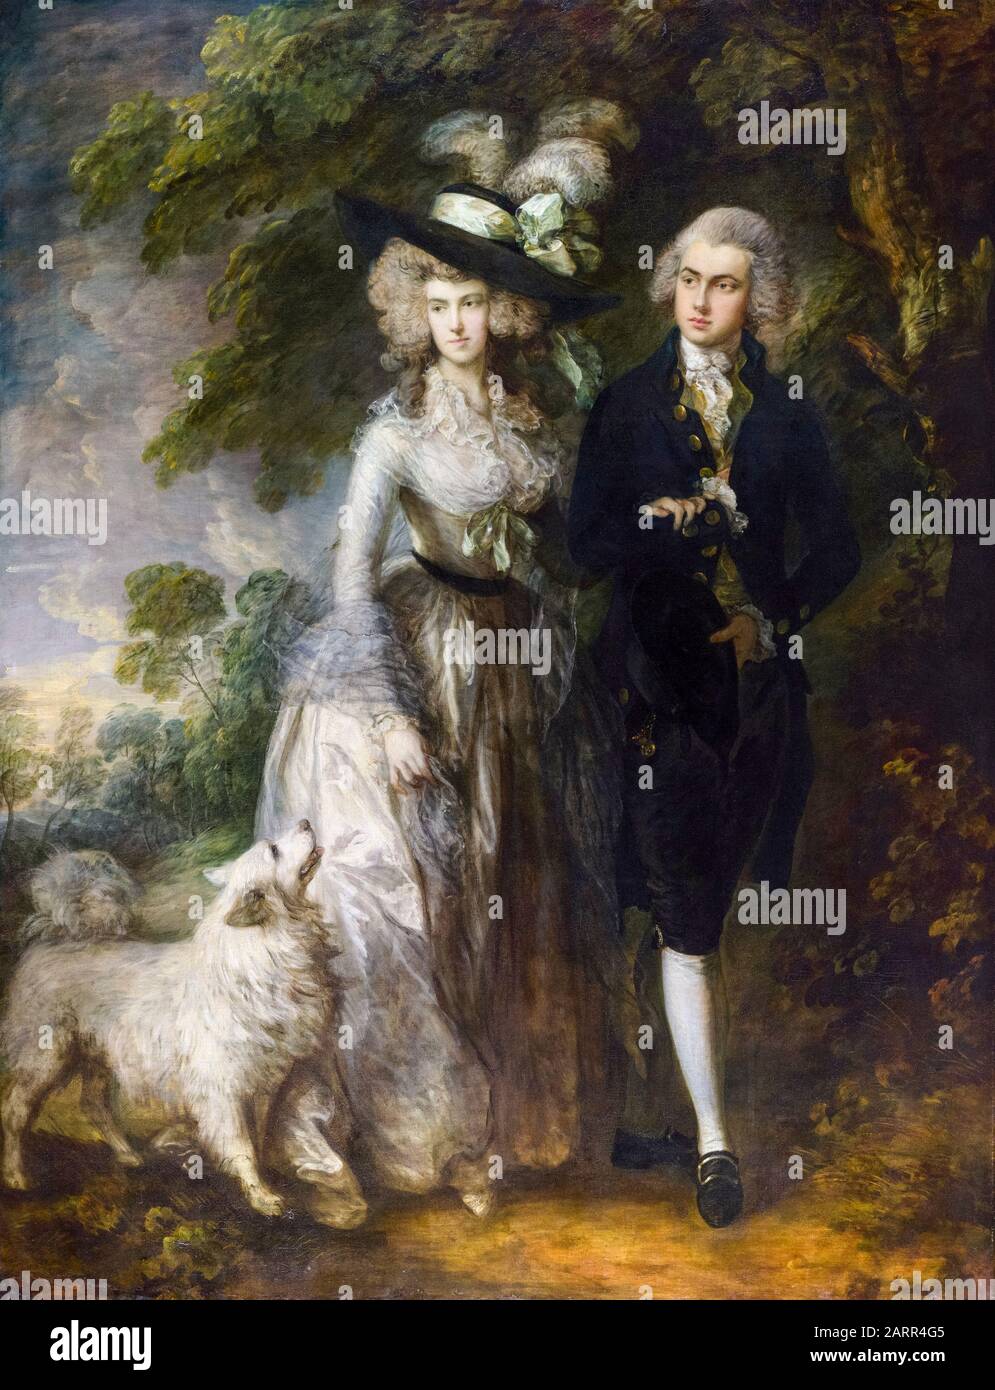 Thomas Gainsborough, Mr and Mrs William Hallett (The Morning Walk), portrait painting, 1785 Stock Photo